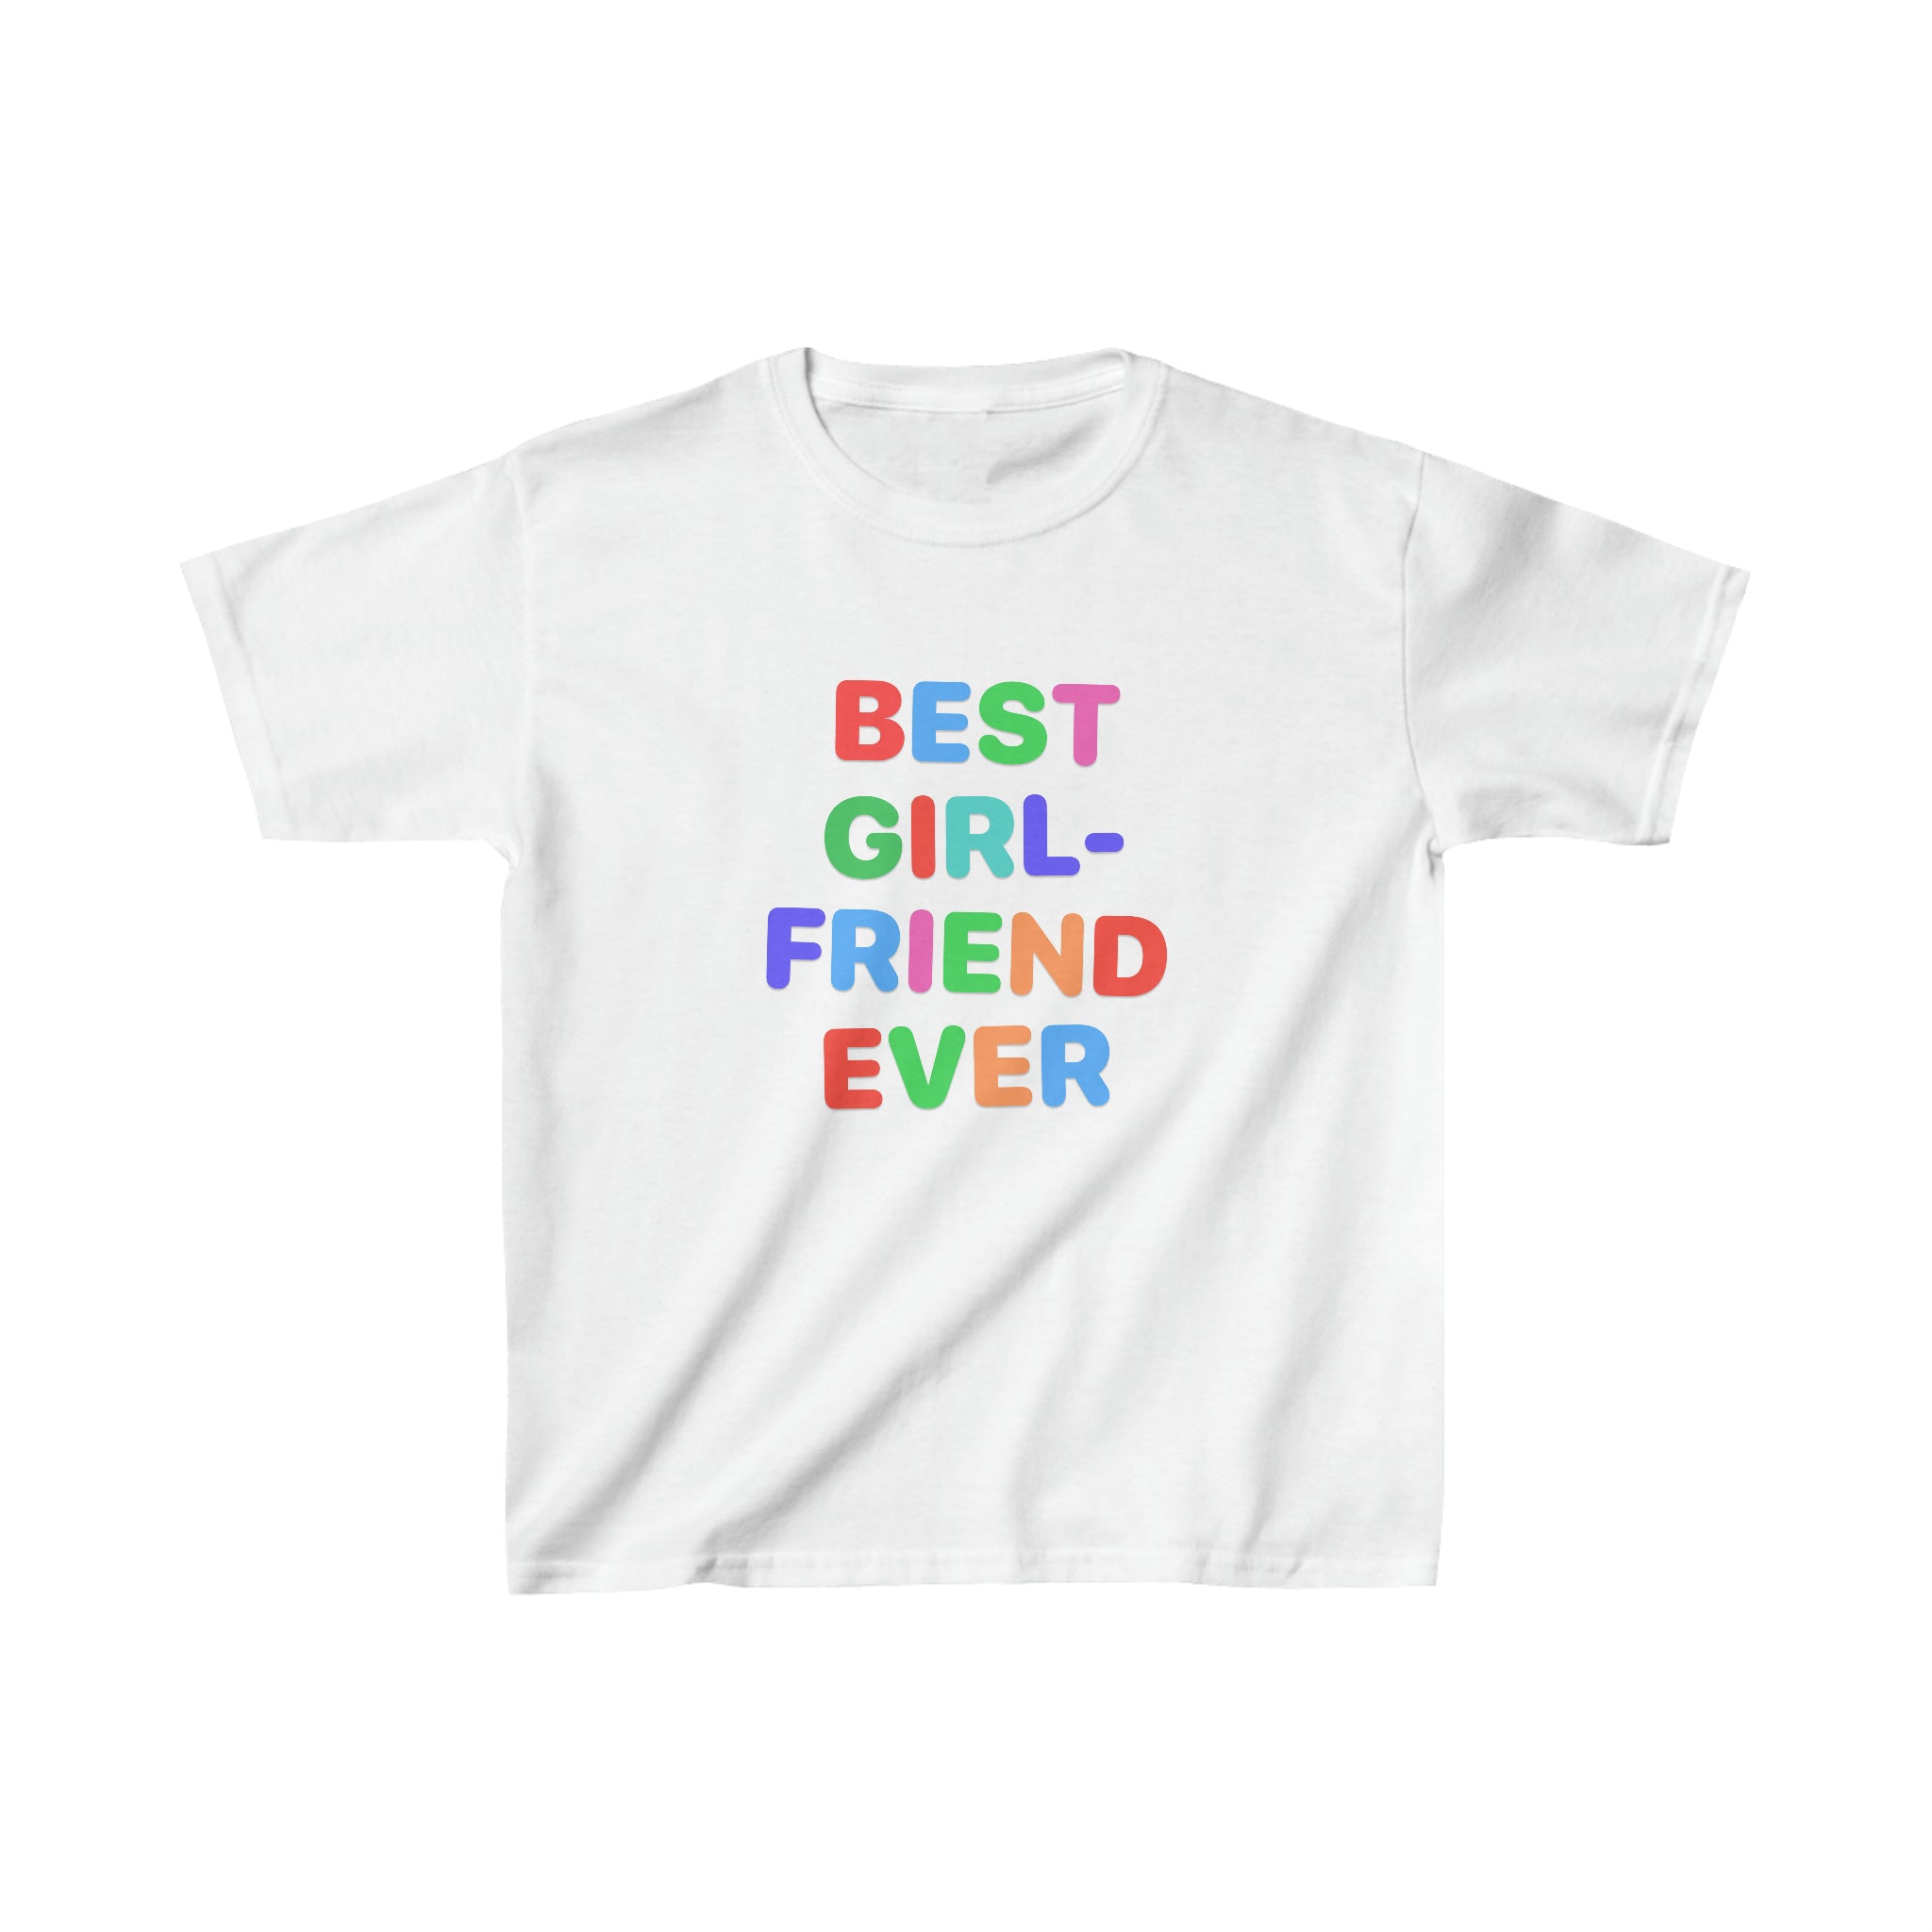 'Best Girlfriend Ever' baby tee - In Print We Trust